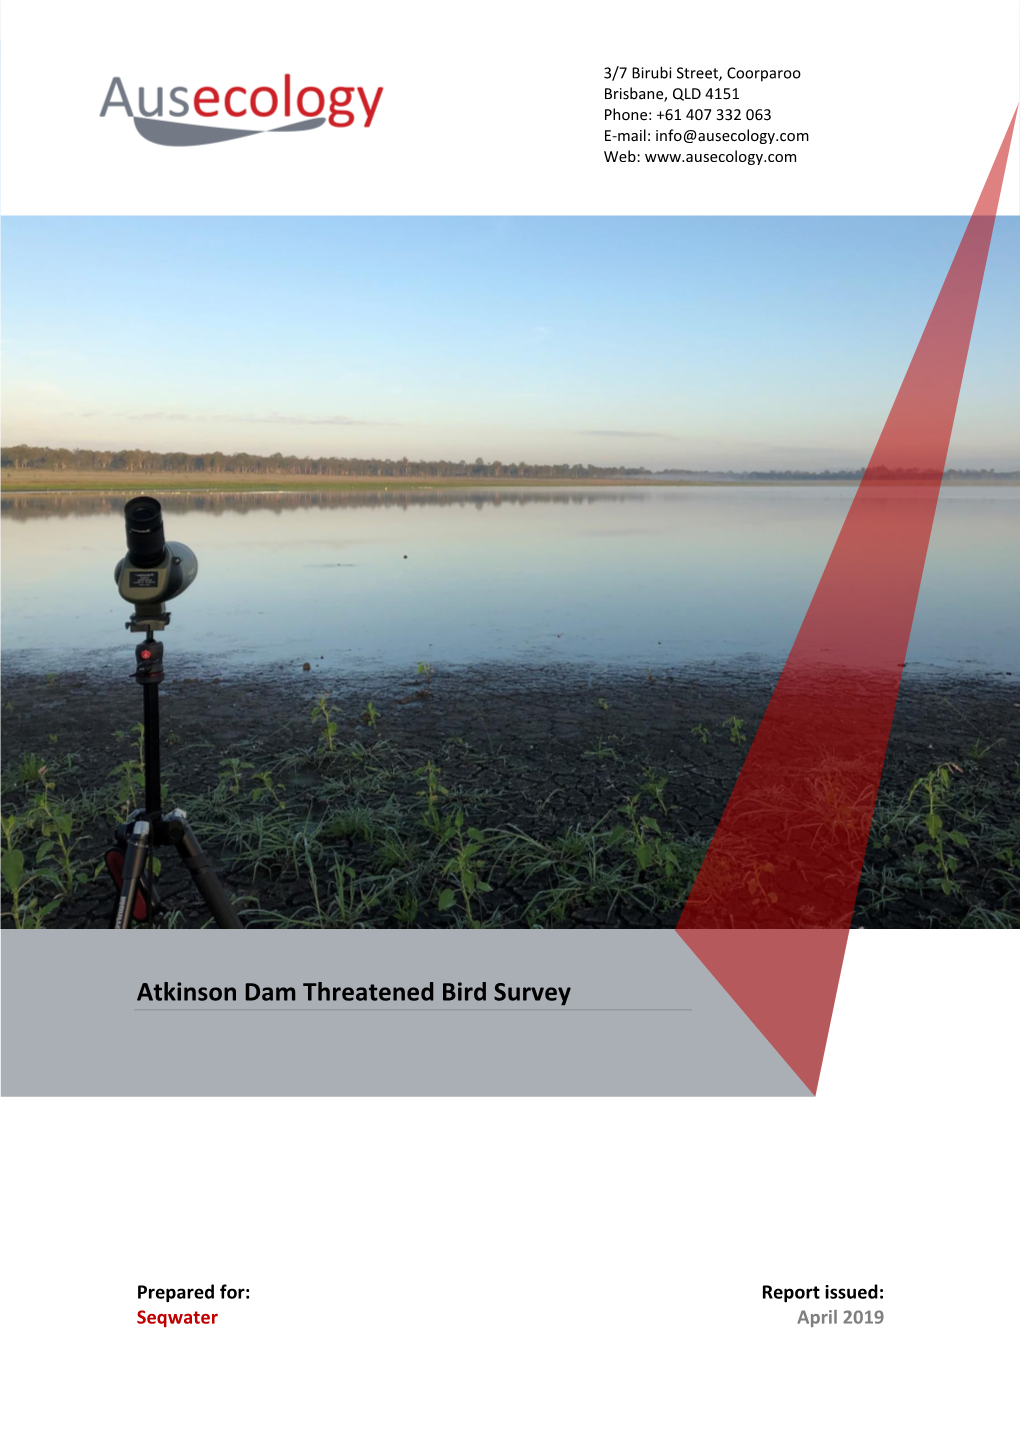 Atkinson Dam Threatened Bird Survey